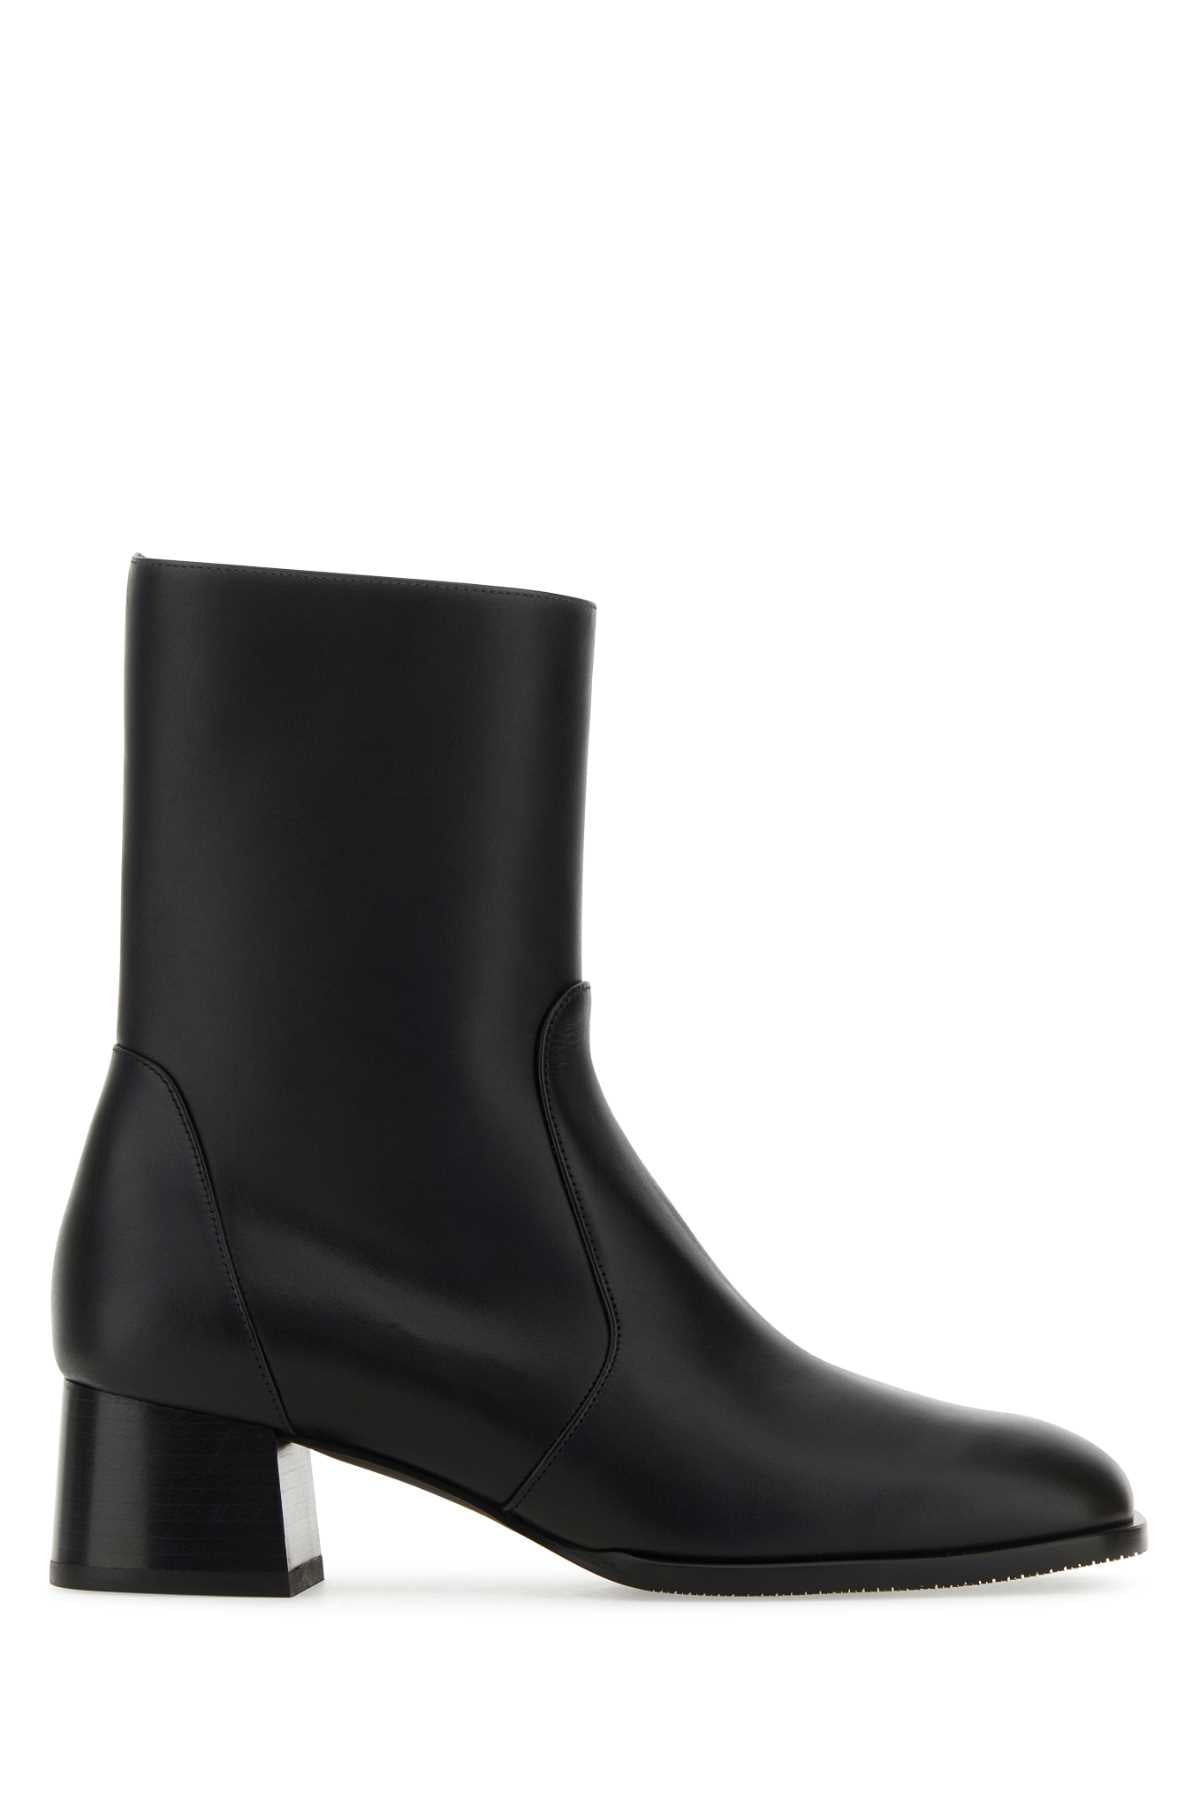 Stuart Weitzman Woman Black Leather Nola Zip Ankle Boots - Walmart.com